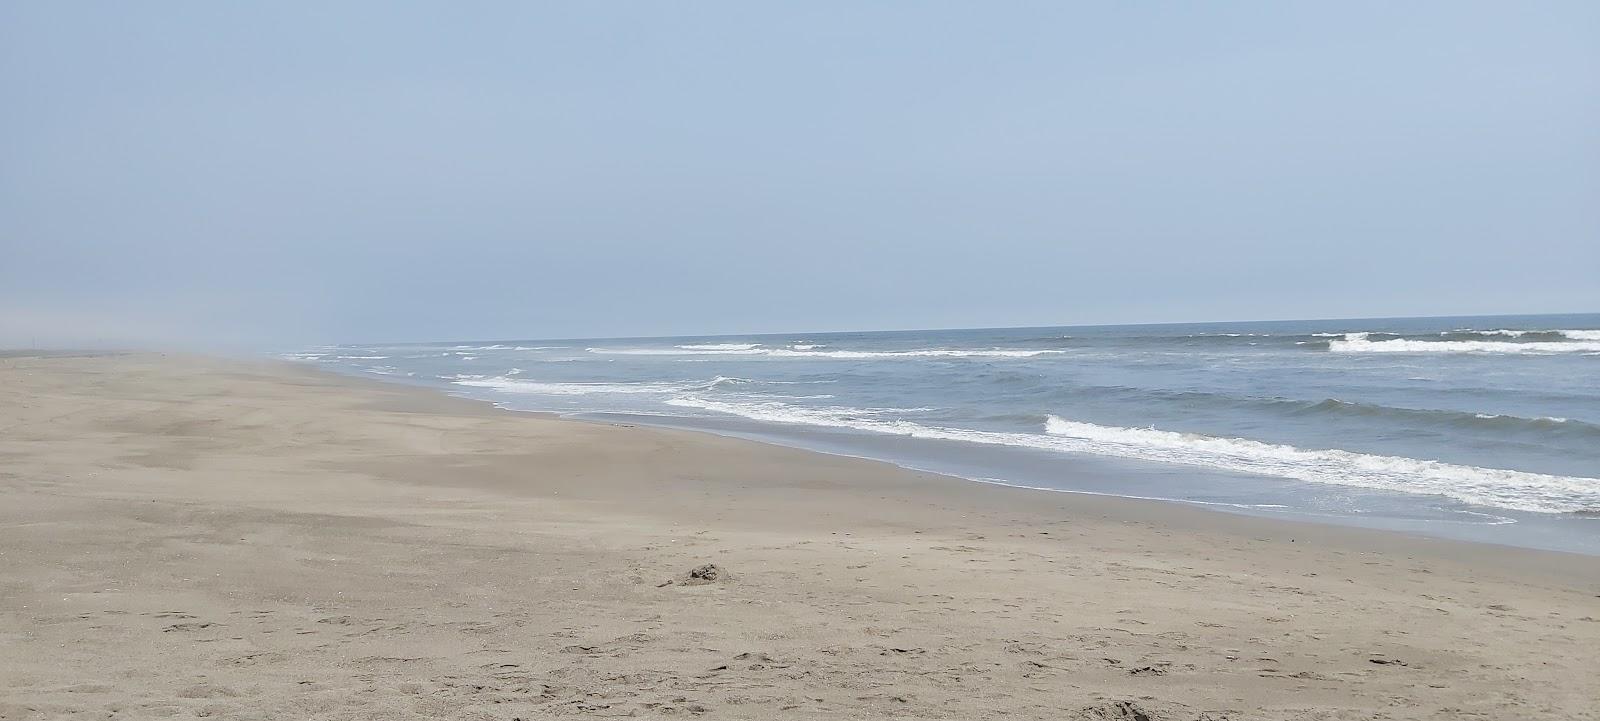 Sandee - Playa El Charco